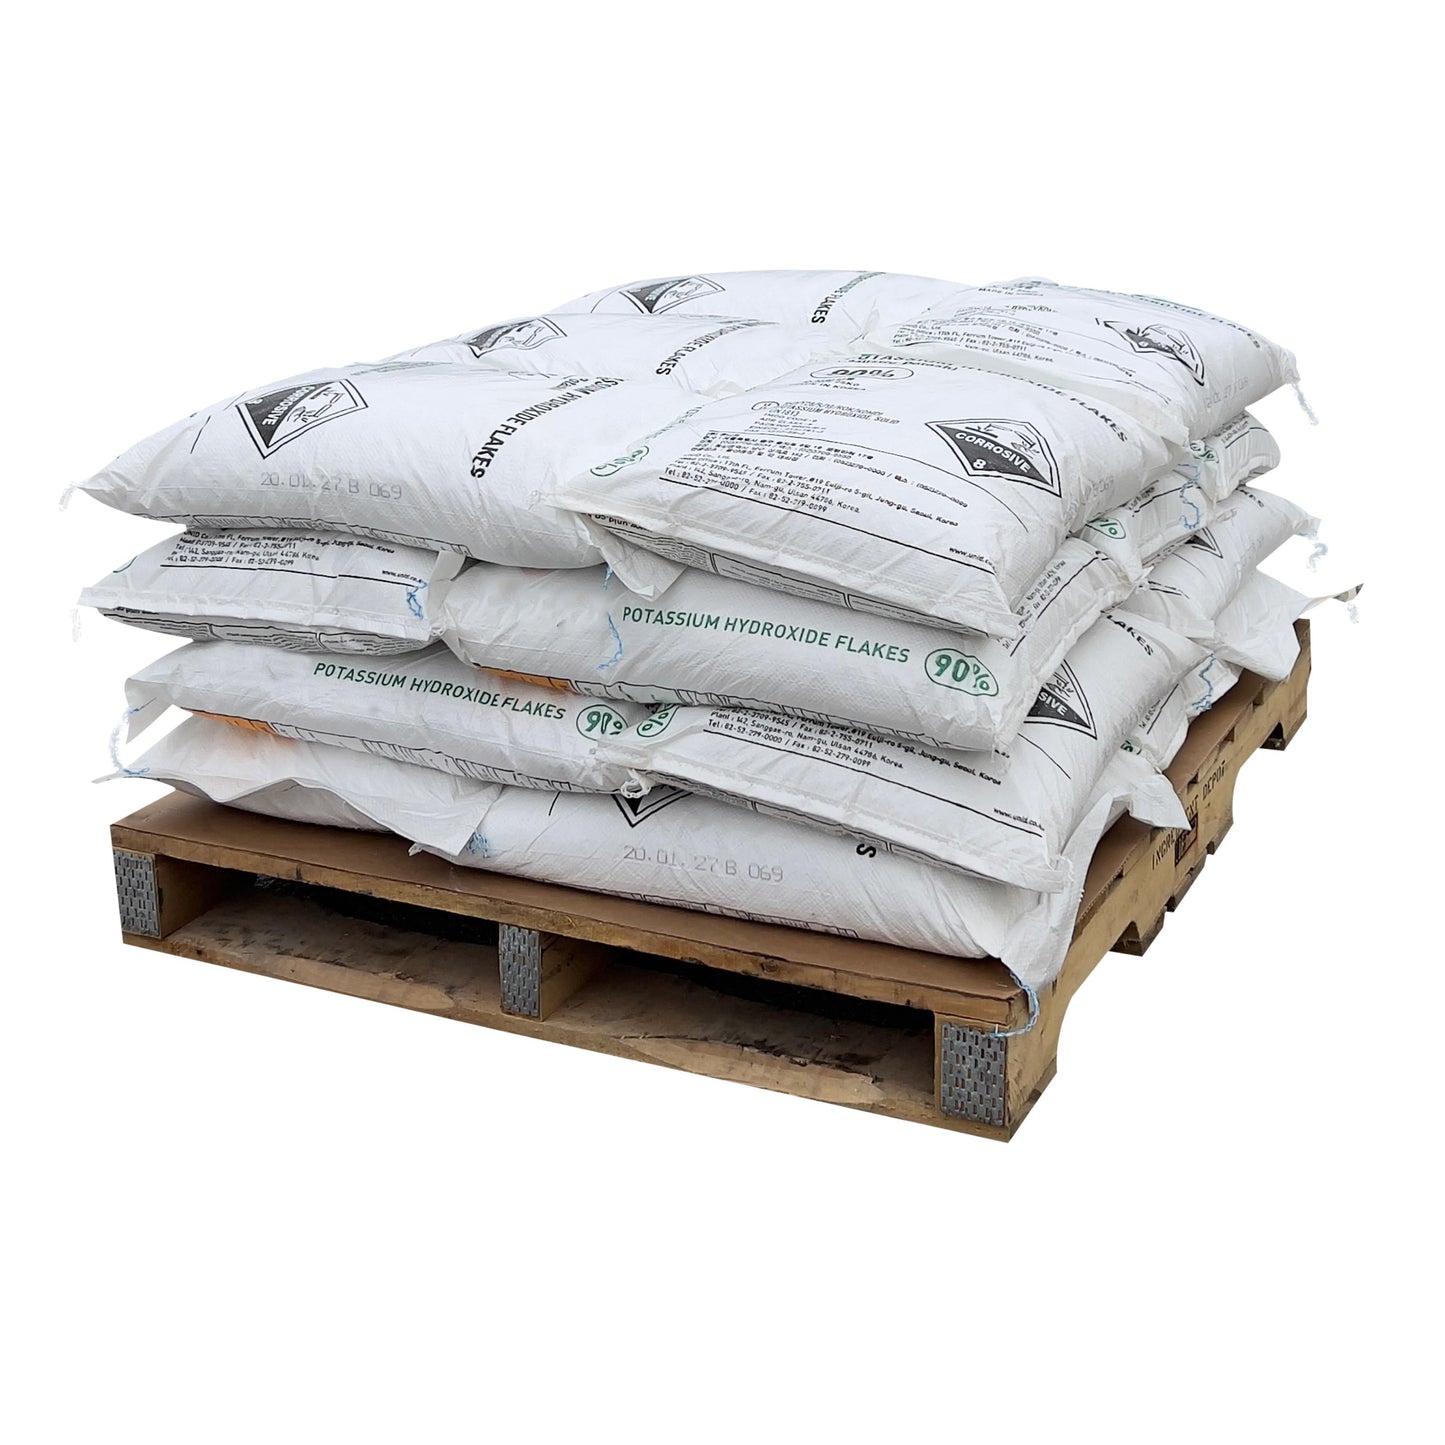 Potassium Hydroxide (Caustic Potash or KOH) Flakes - 22.68 kgs Bag(s) on a Pallet - IngredientDepot.com